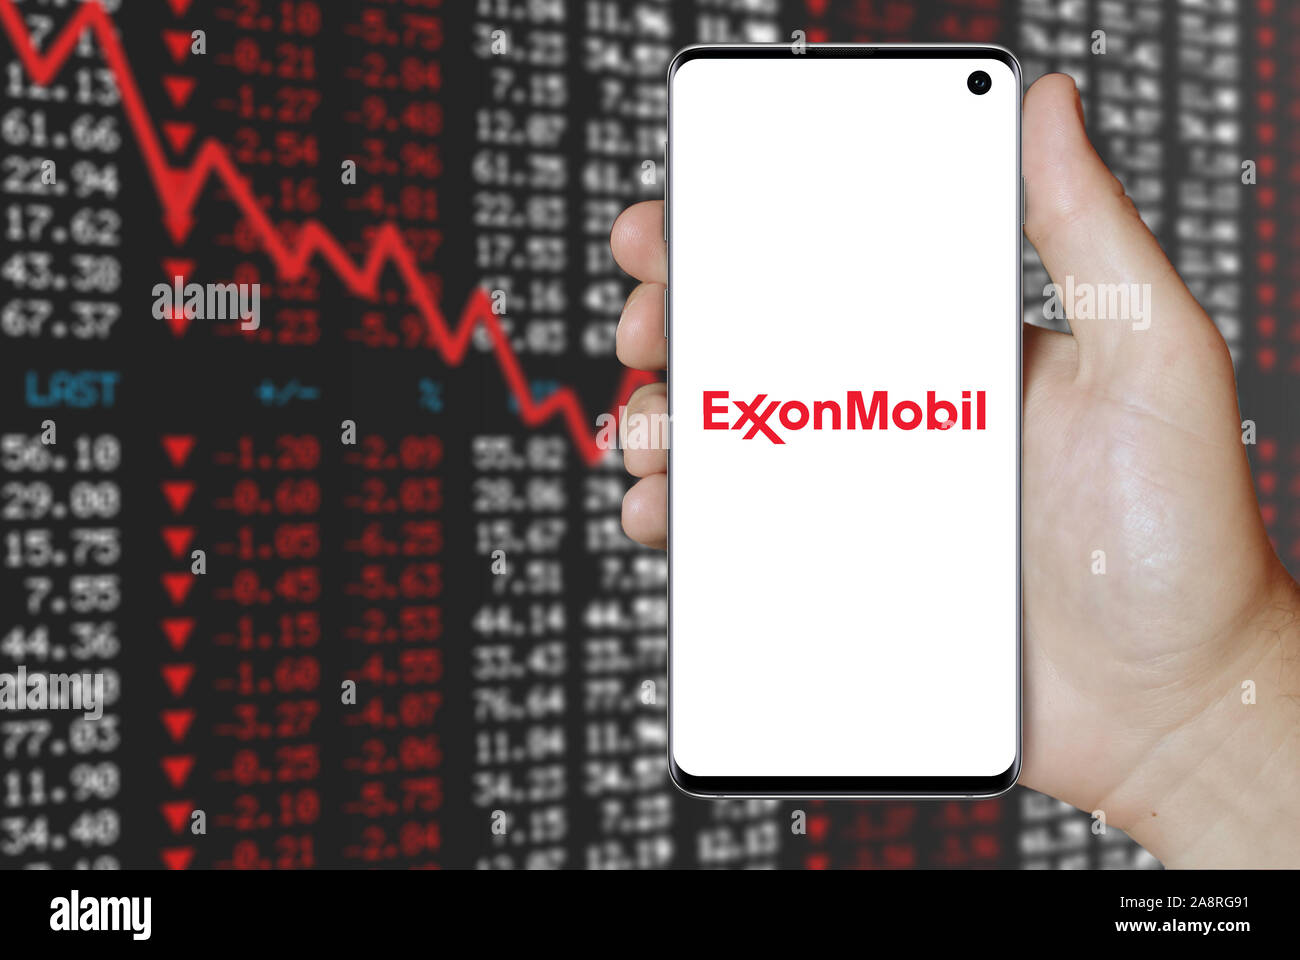 Logo of public company Exxon Mobil Corp. displayed on a smartphone.  Negative stock market background. Credit: PIXDUCE Stock Photo - Alamy